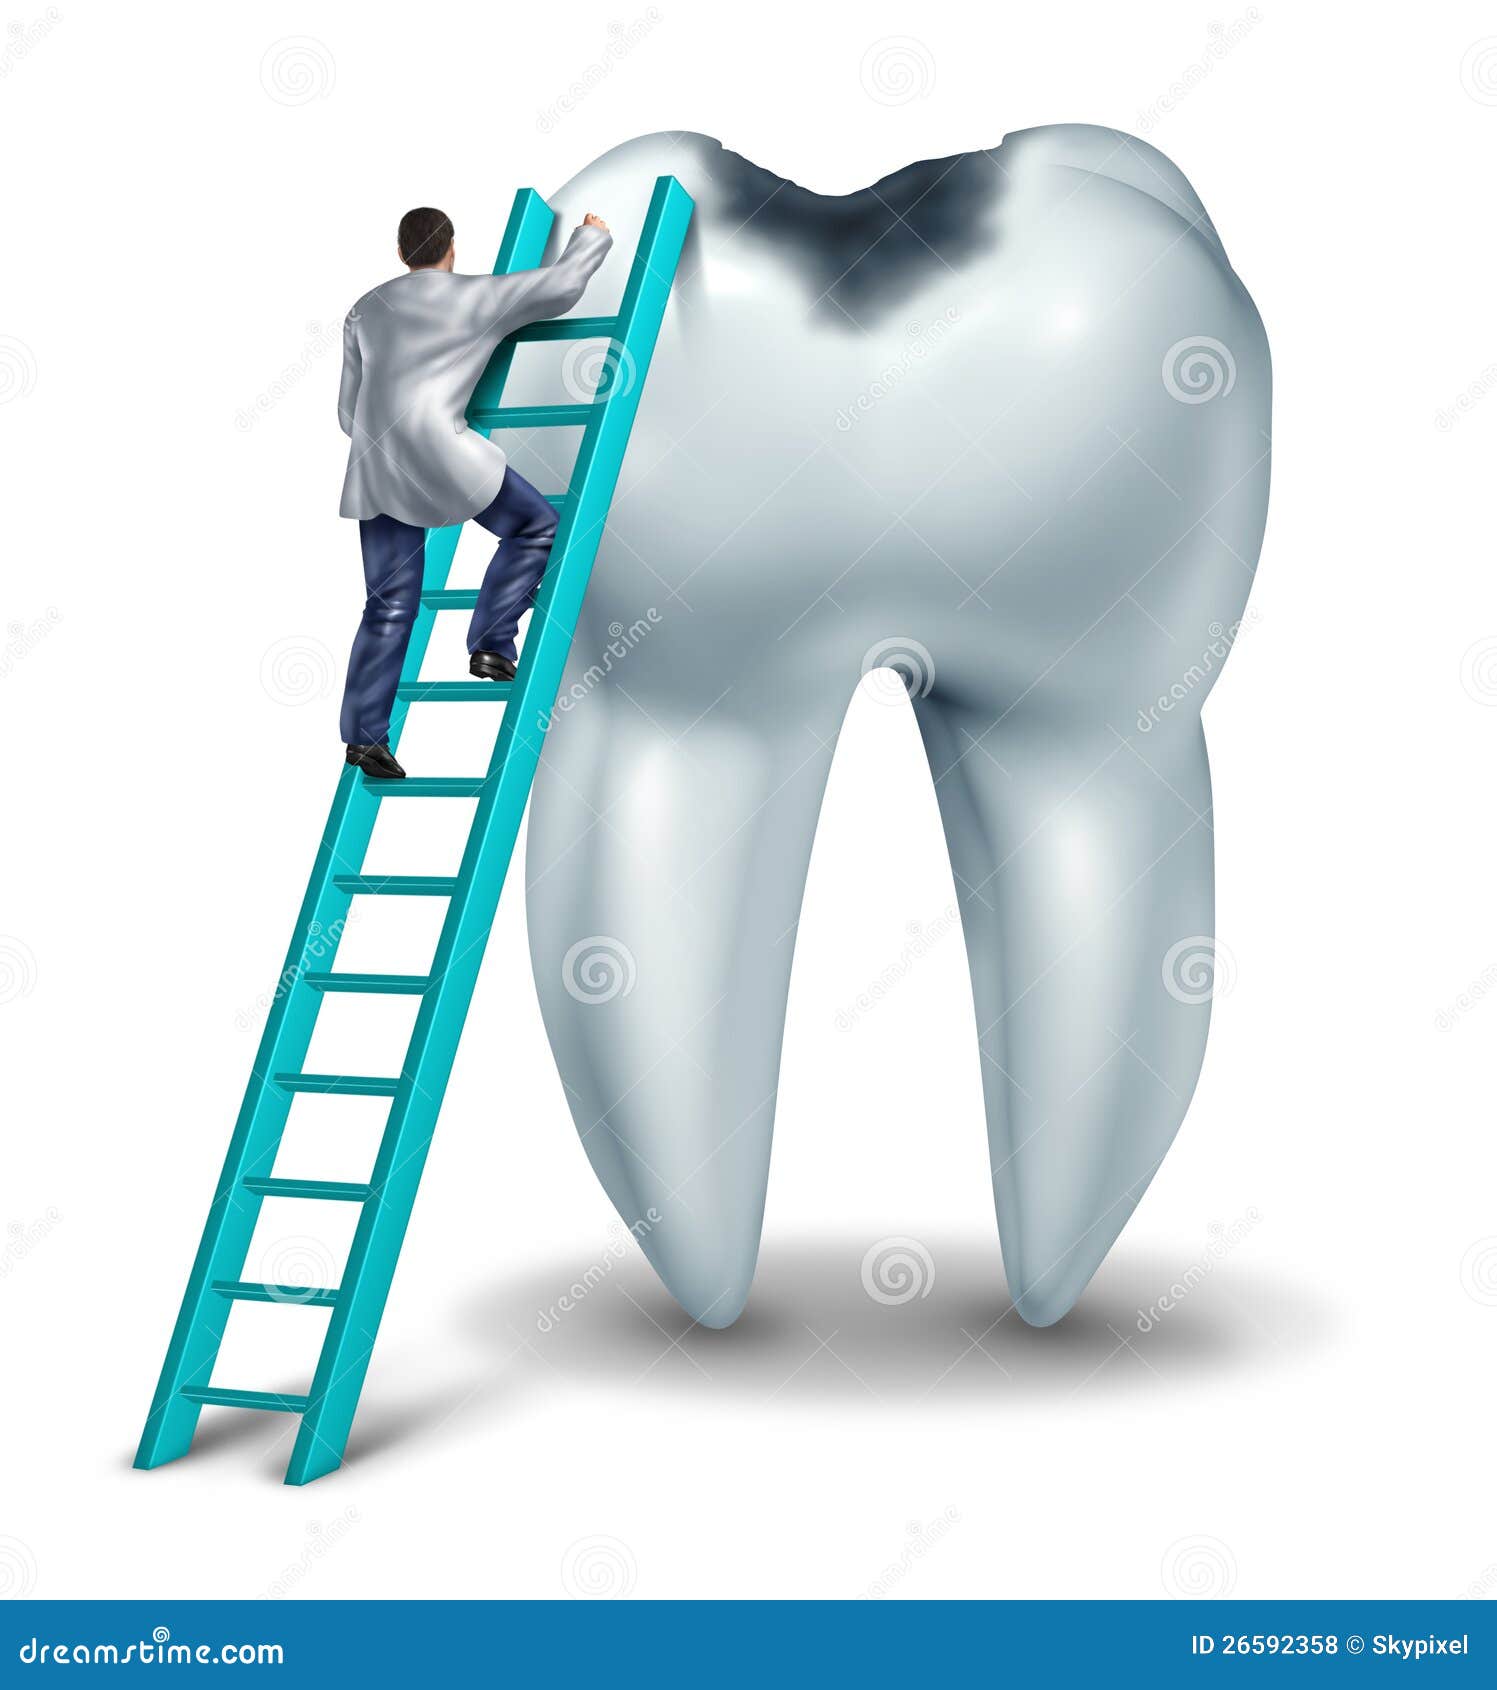 dental-care-26592358.jpg